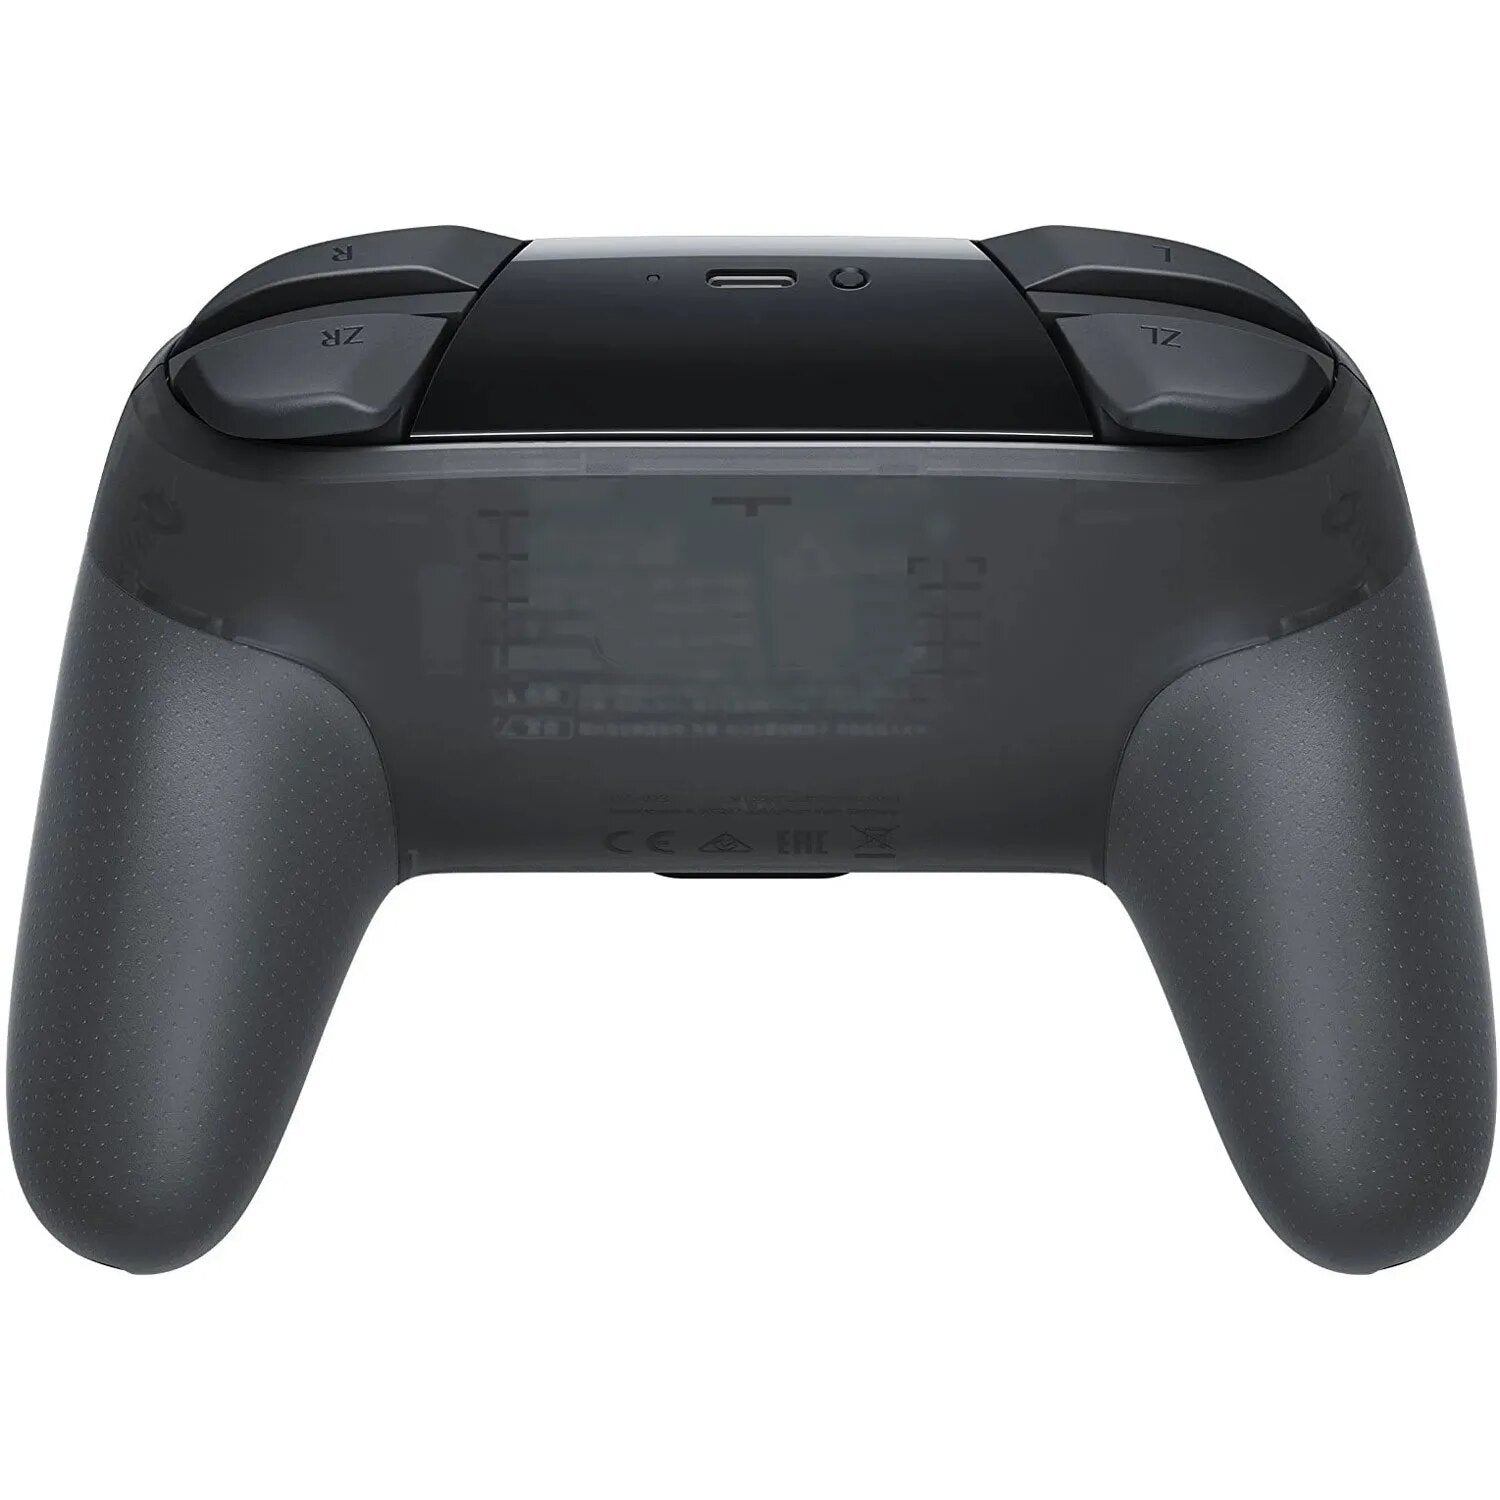 Bluetooth Wireless Switch Pro Controller Gamepad For Nintendo Switch/Lite/Steam